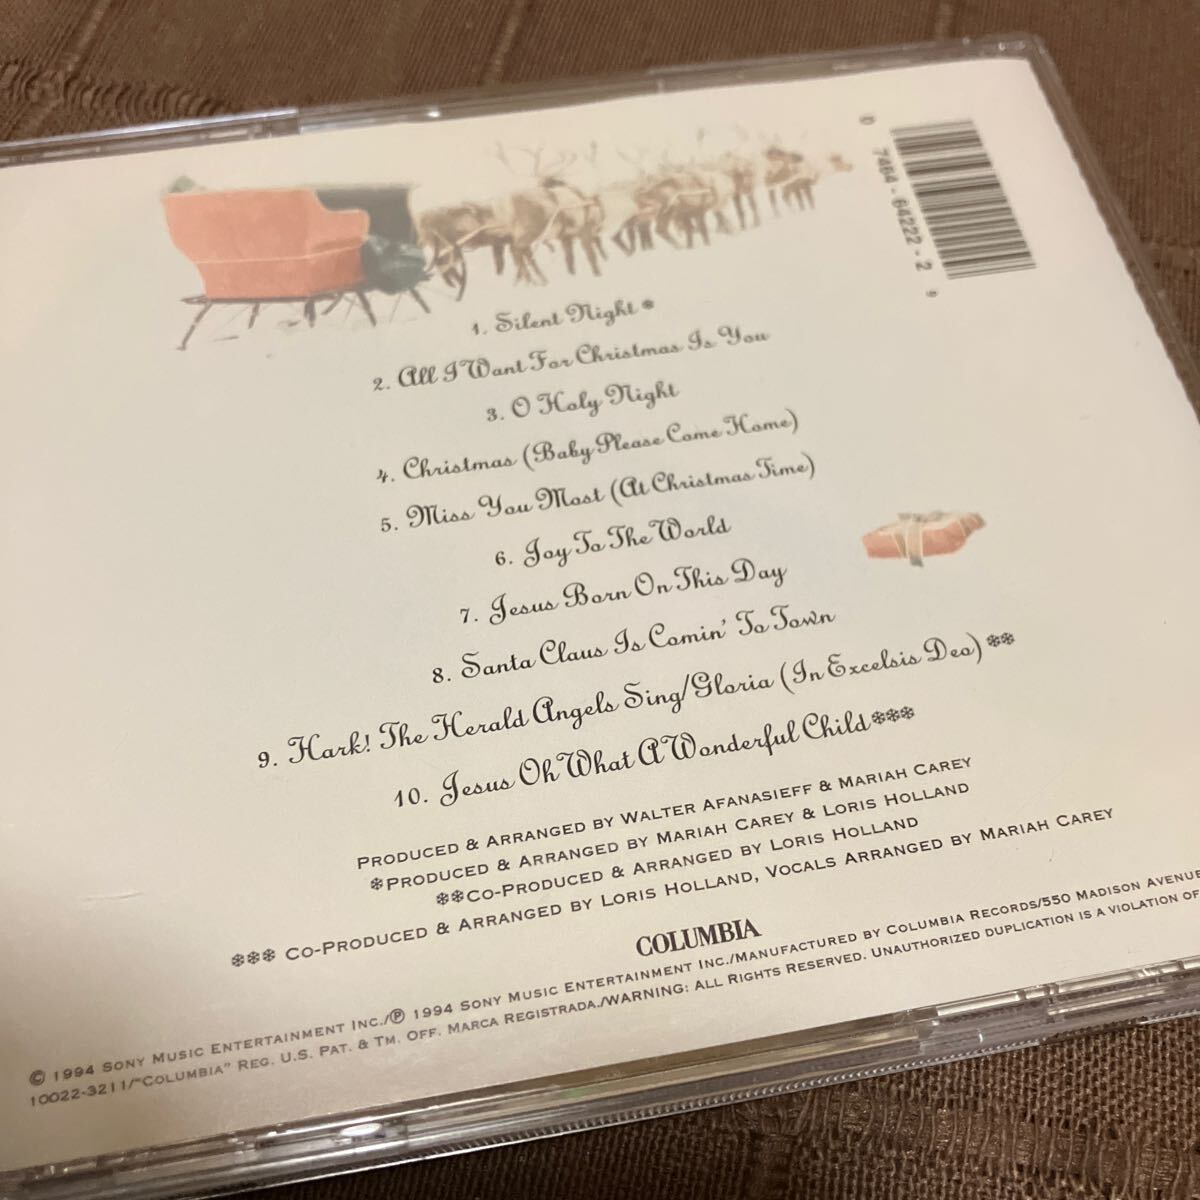 malaia* Carry Mariah Carey с автографом CD Merry Christmas альбом 